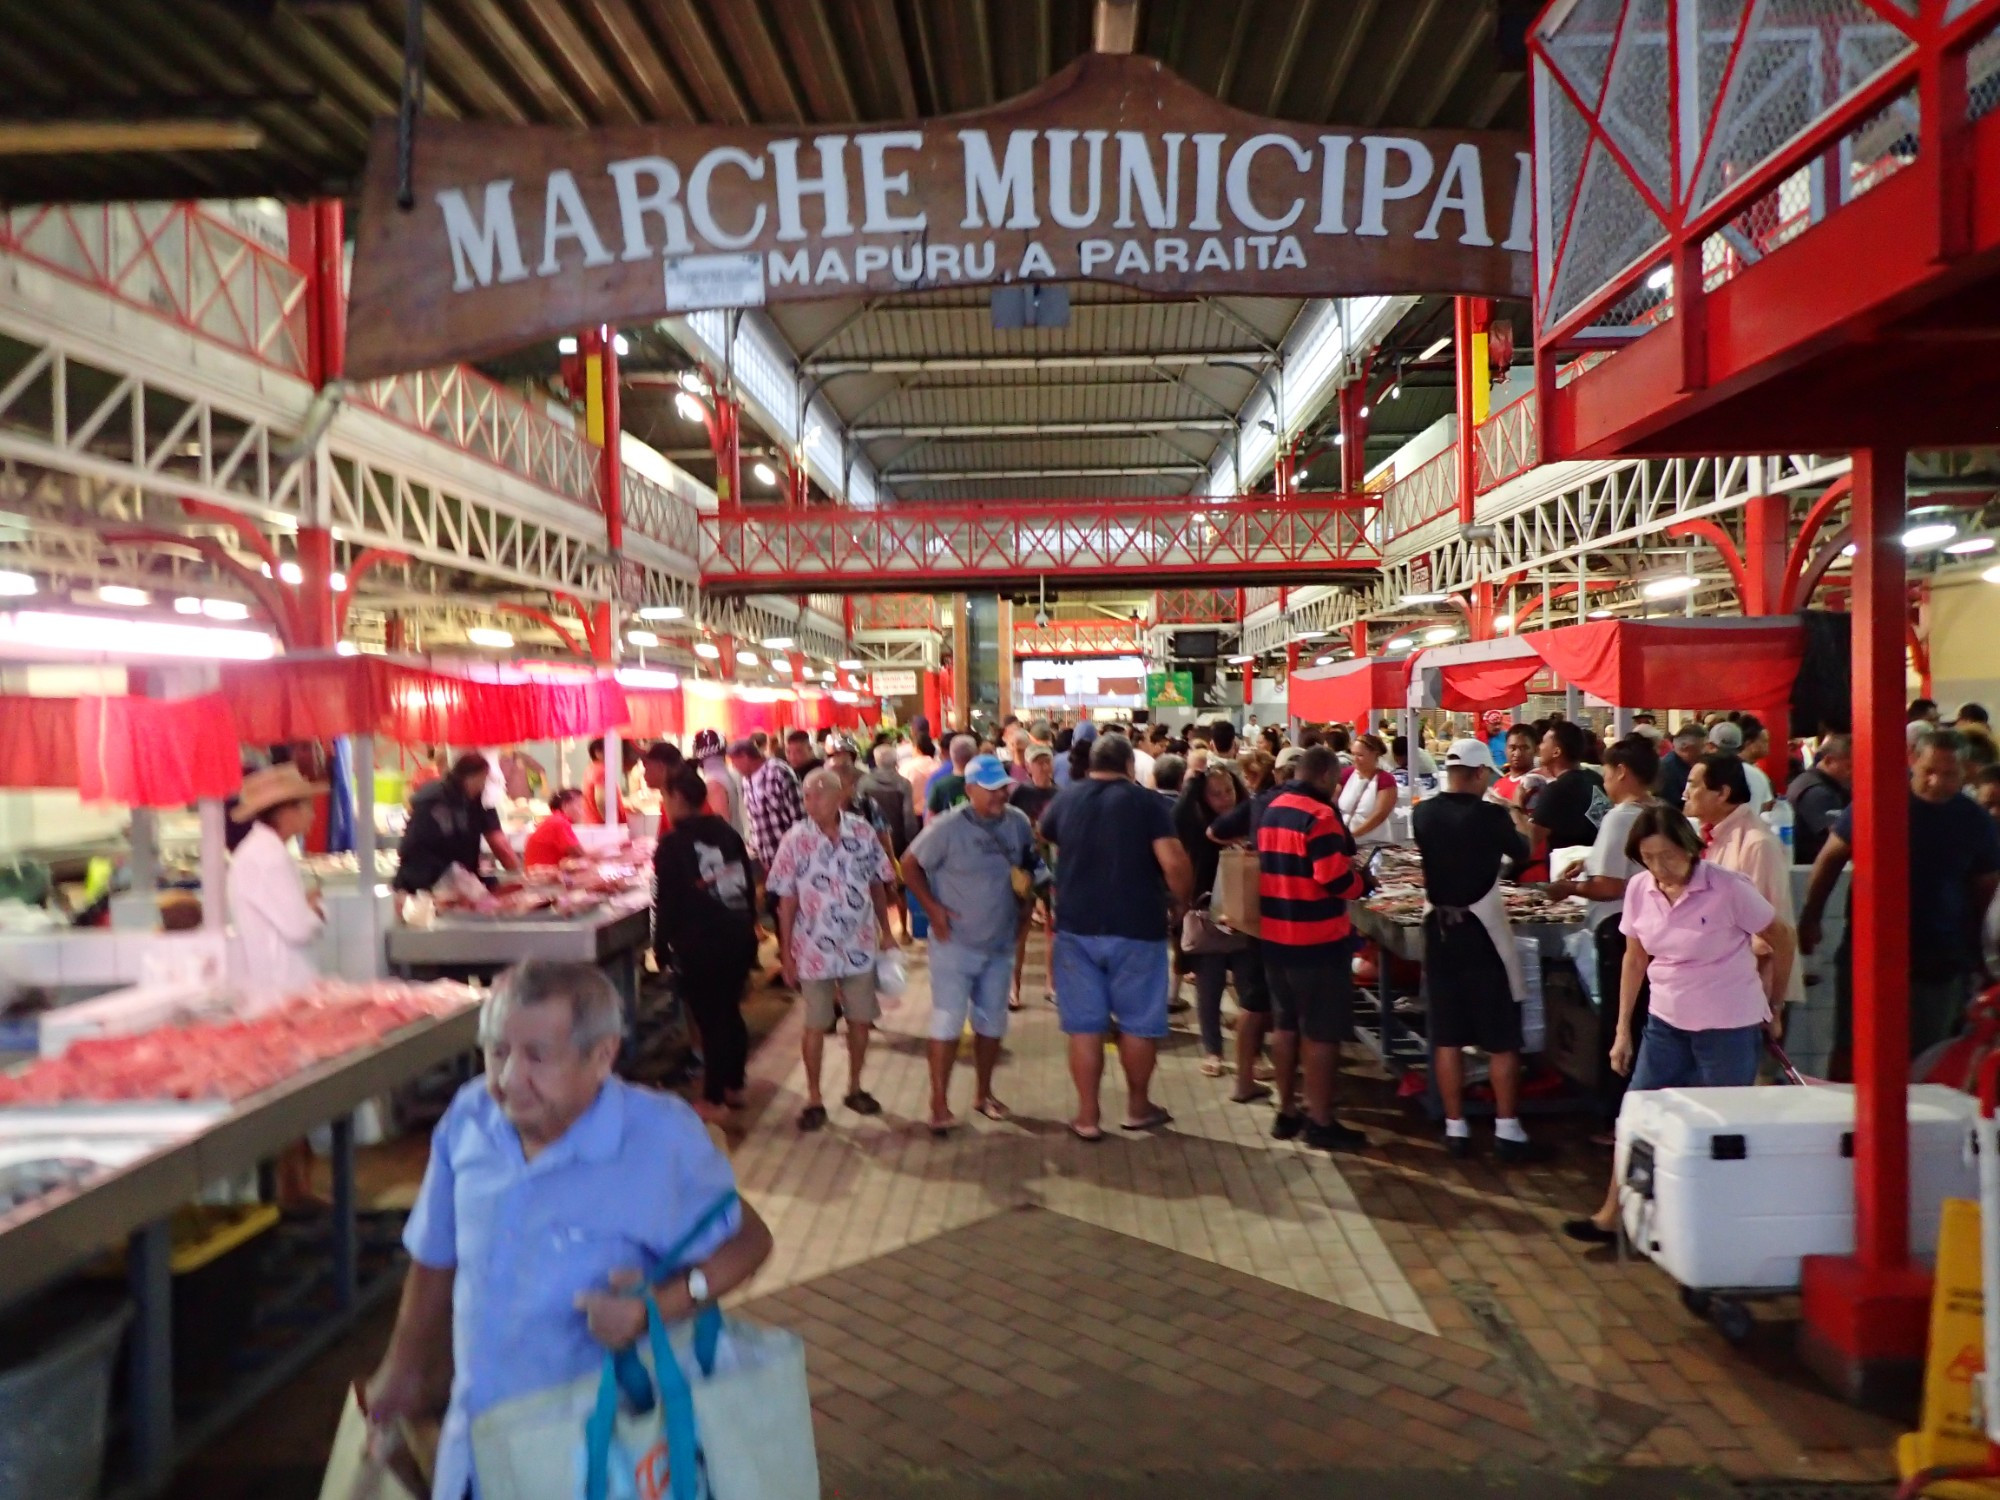 Papeete Municipal Market, French Polynesia